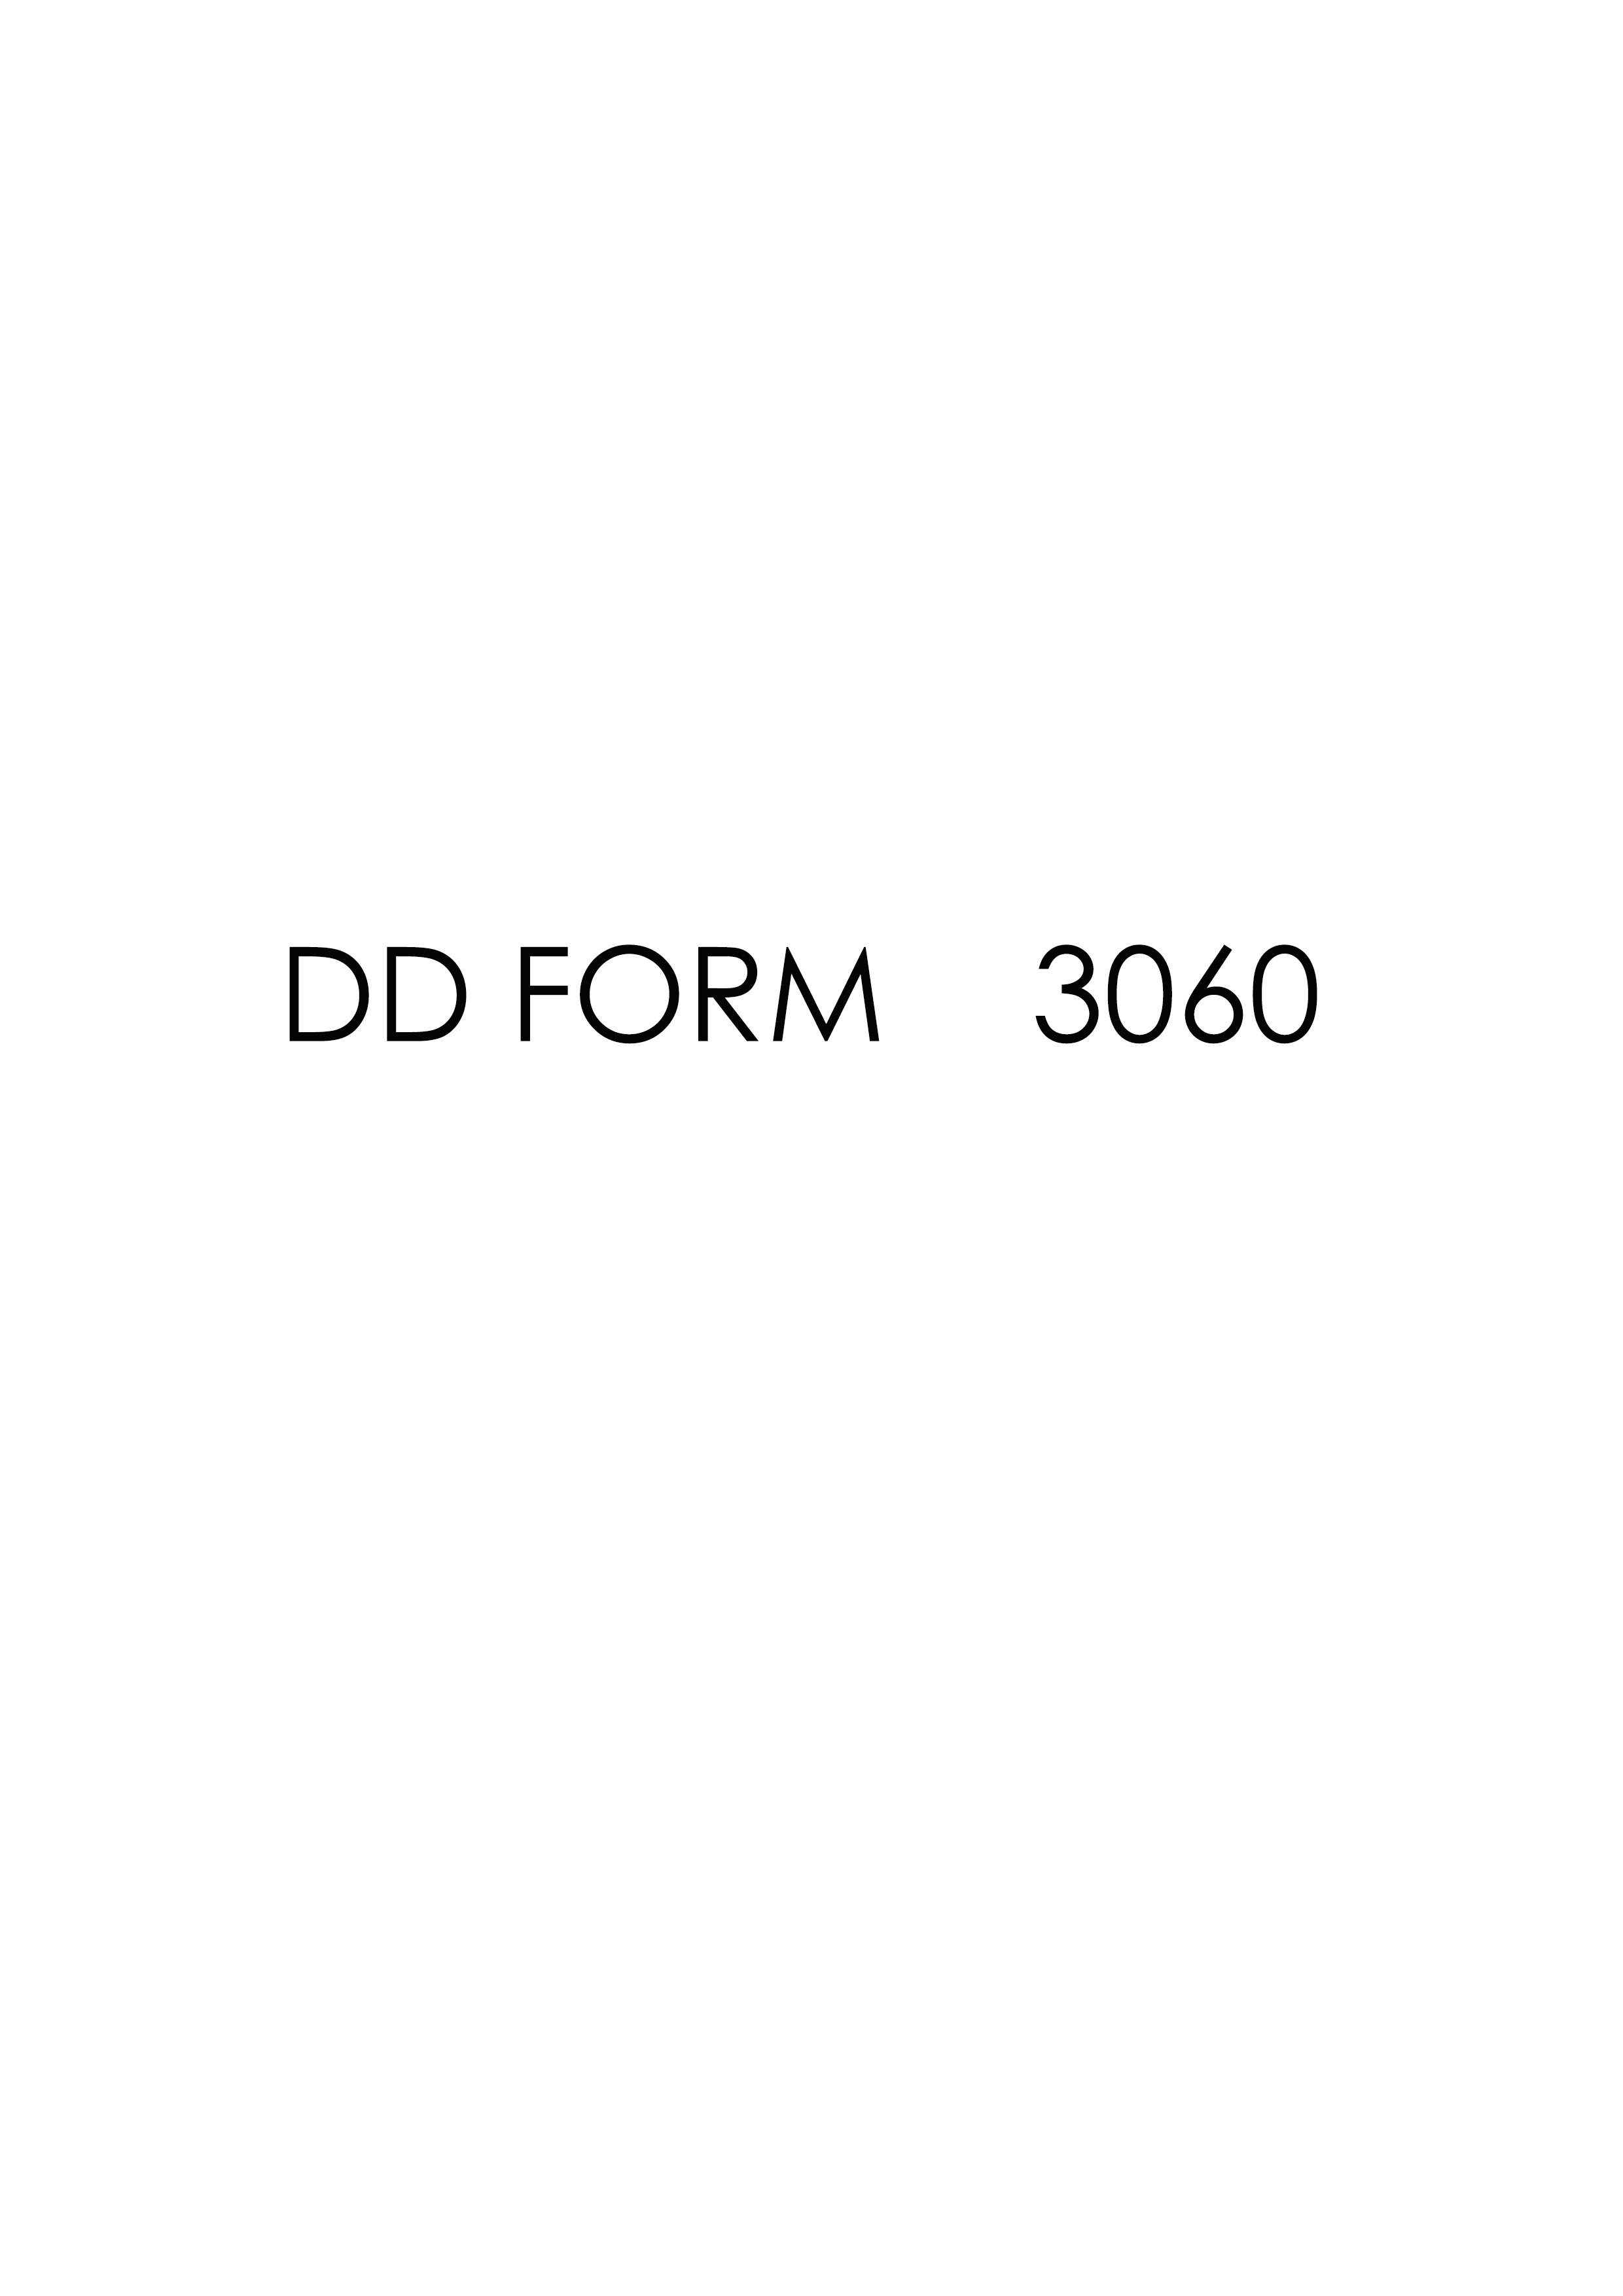 Download dd 3060 Form